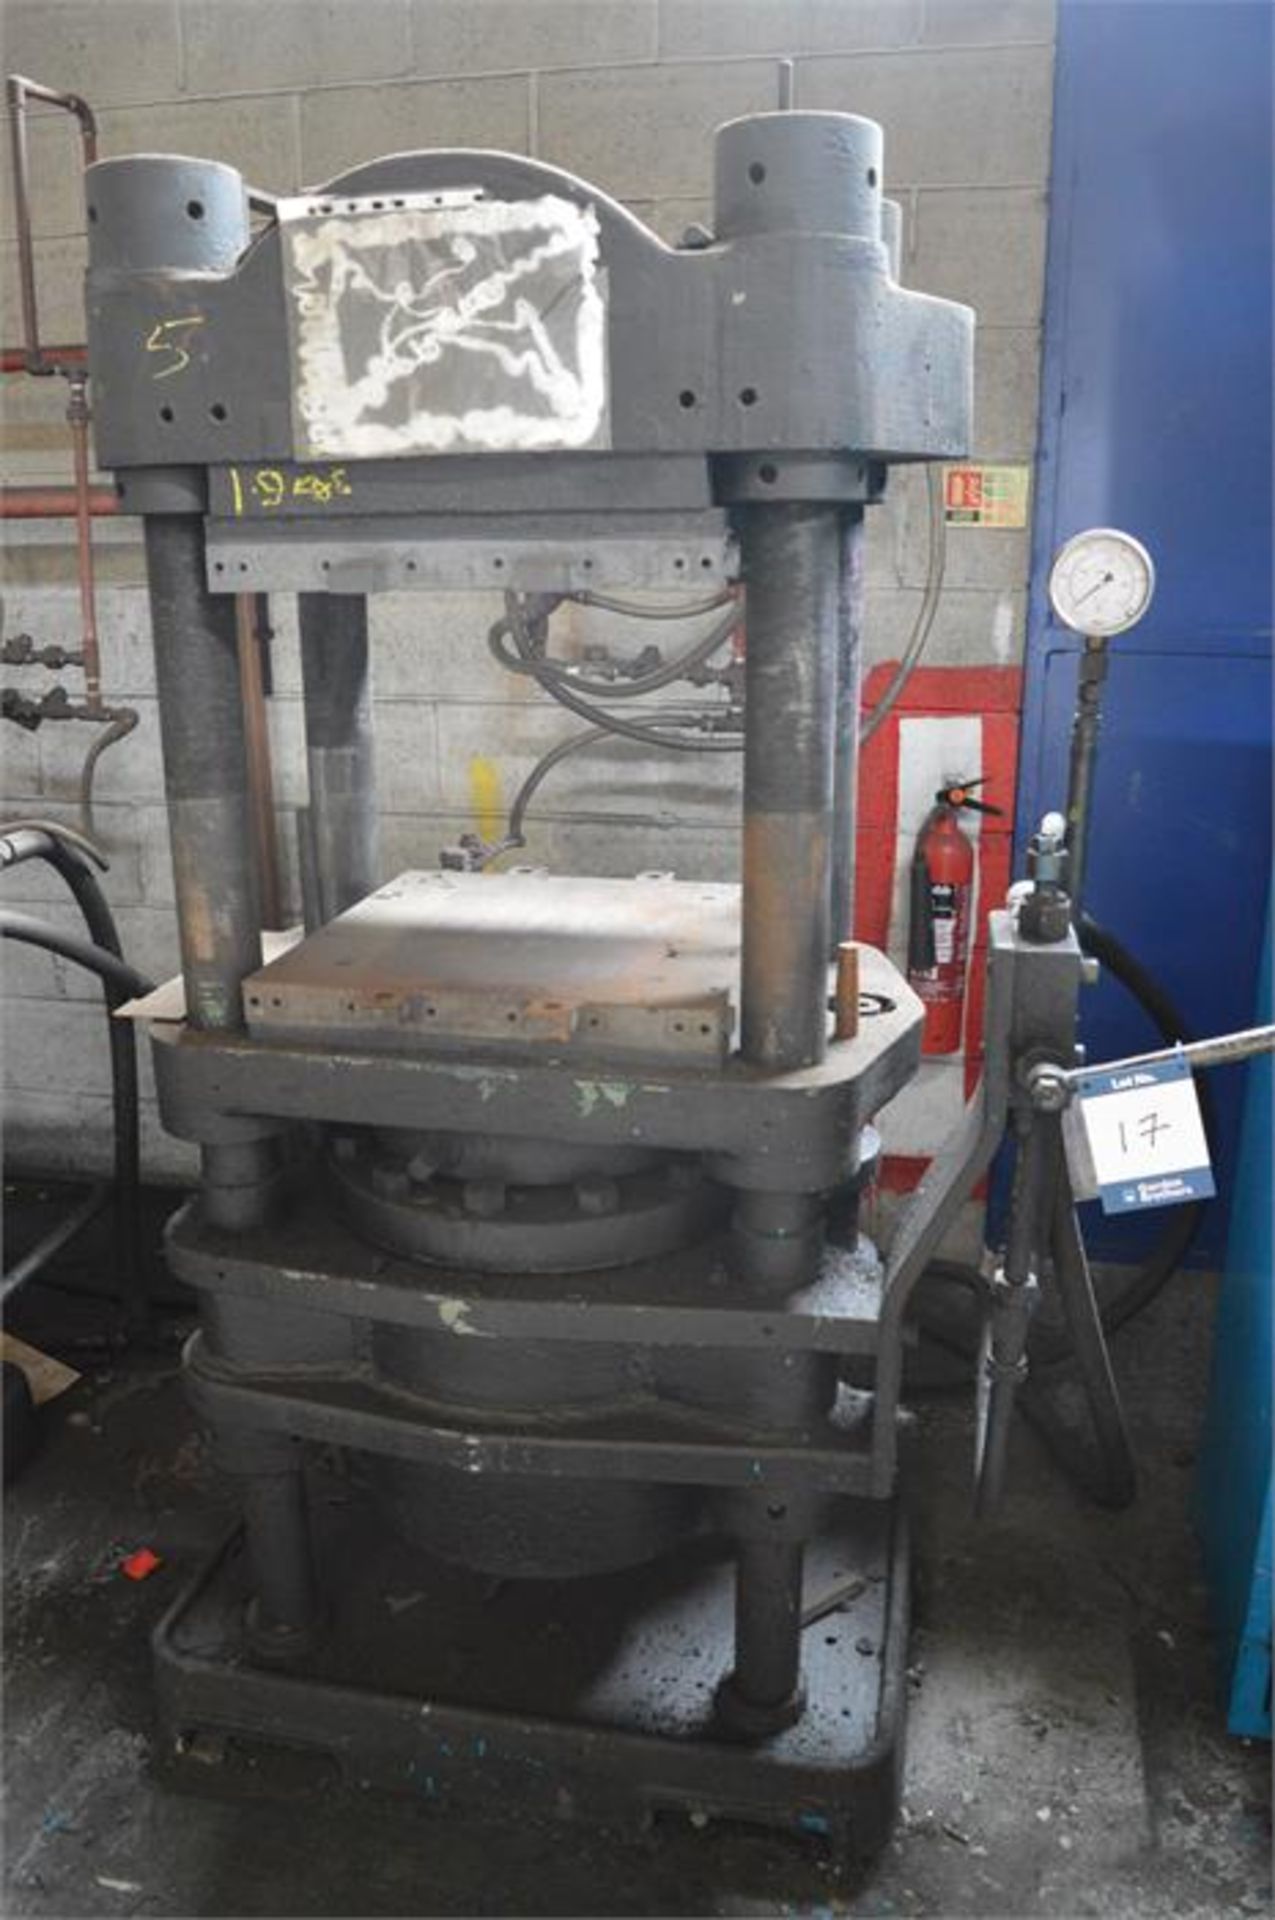 Bradley & Turton, hydraulic upstroke platen press, 20" x 20" steam heated platen, Capacity: 100